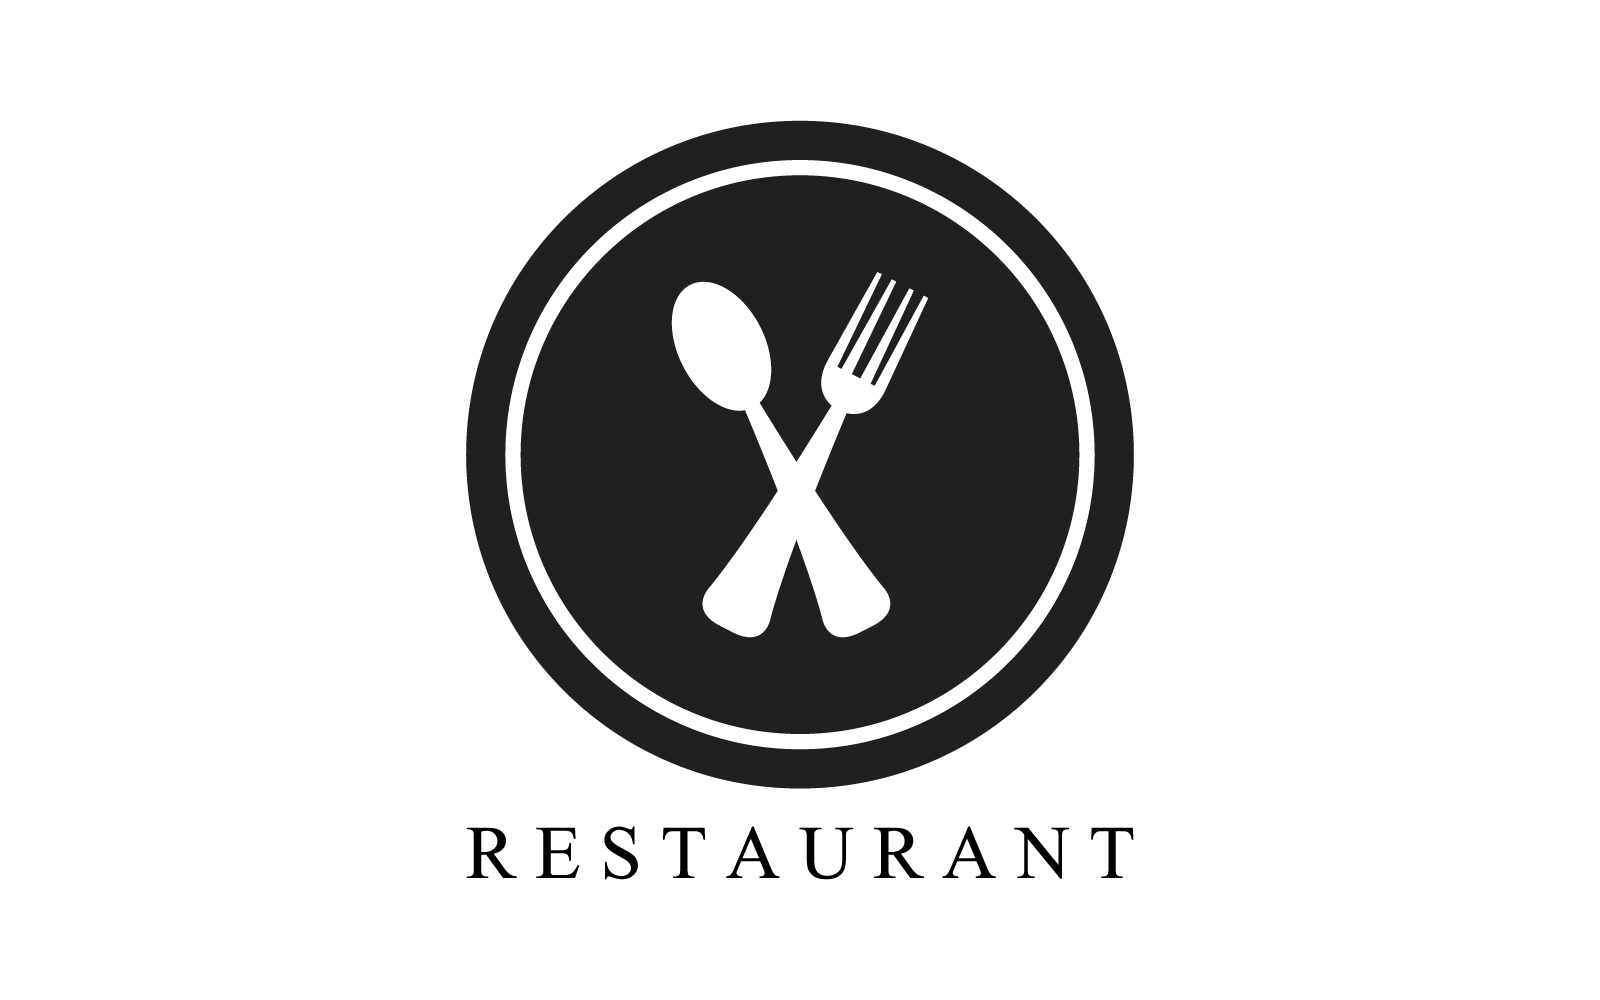 Restaurant logo on a white background